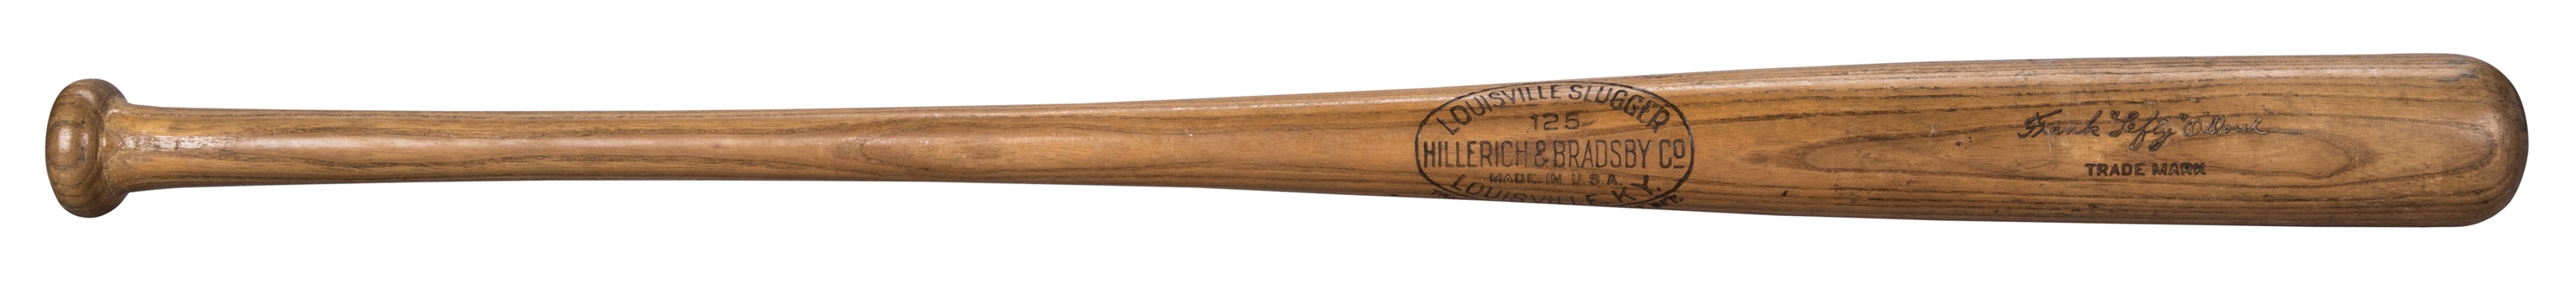 1930 Frank "Lefty" ODoul Game Used Hillerich & Bradsby Pre Model Bat (PSA/DNA GU 8)